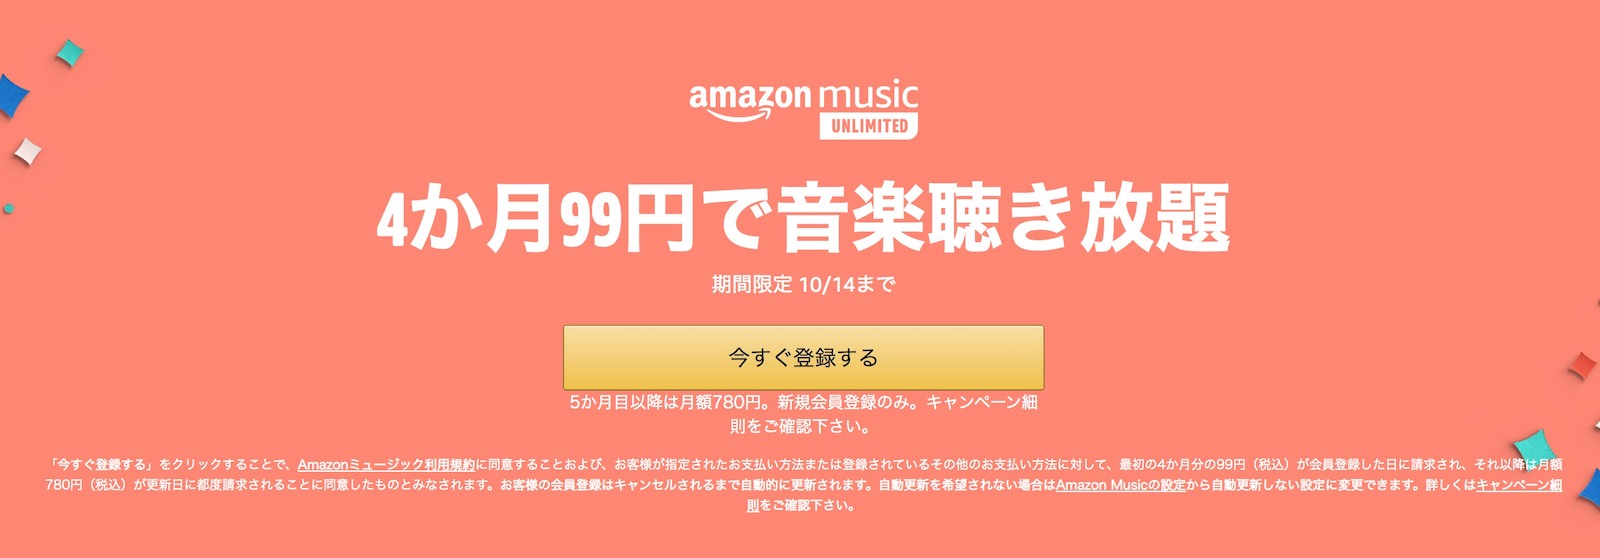 Amazon Music Unlimited Campaign